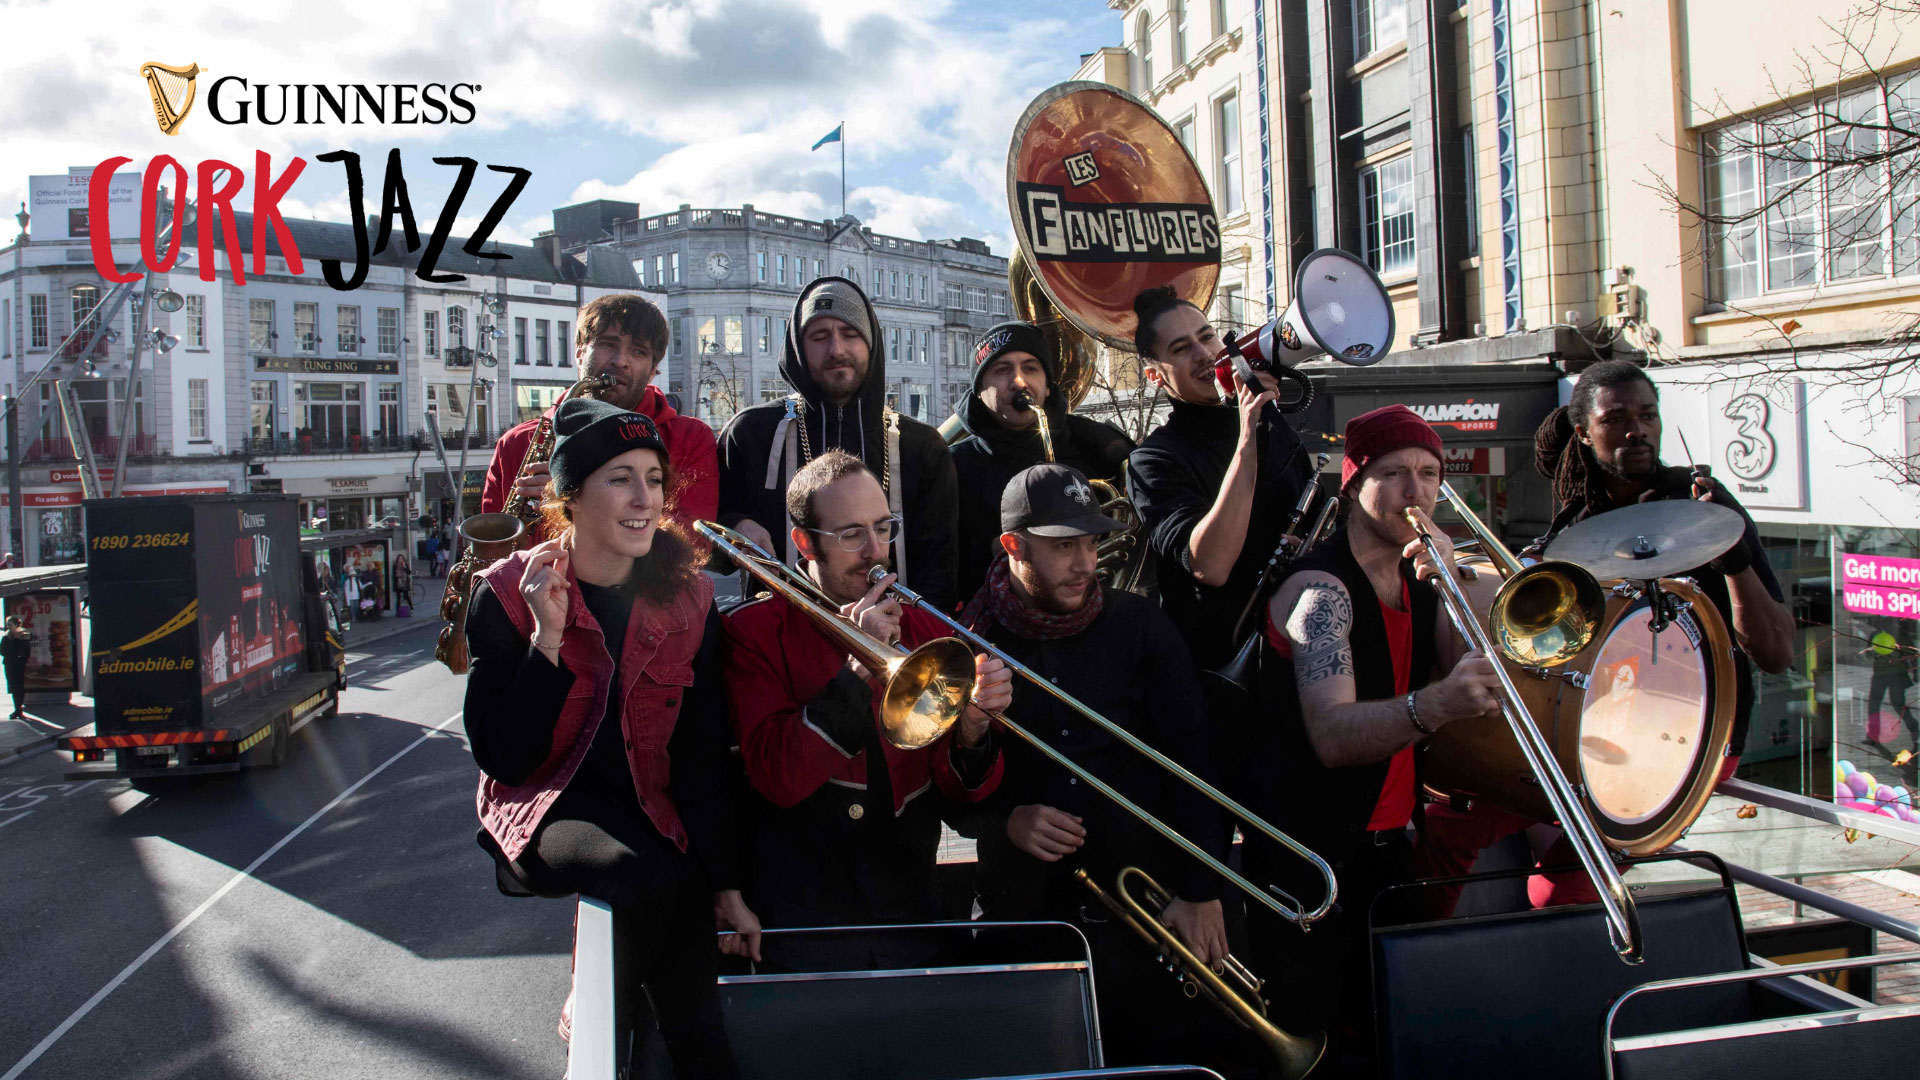 Giants of Jazz among headliners for Guinness Cork Jazz Festival 2019 - Jazz  Ireland